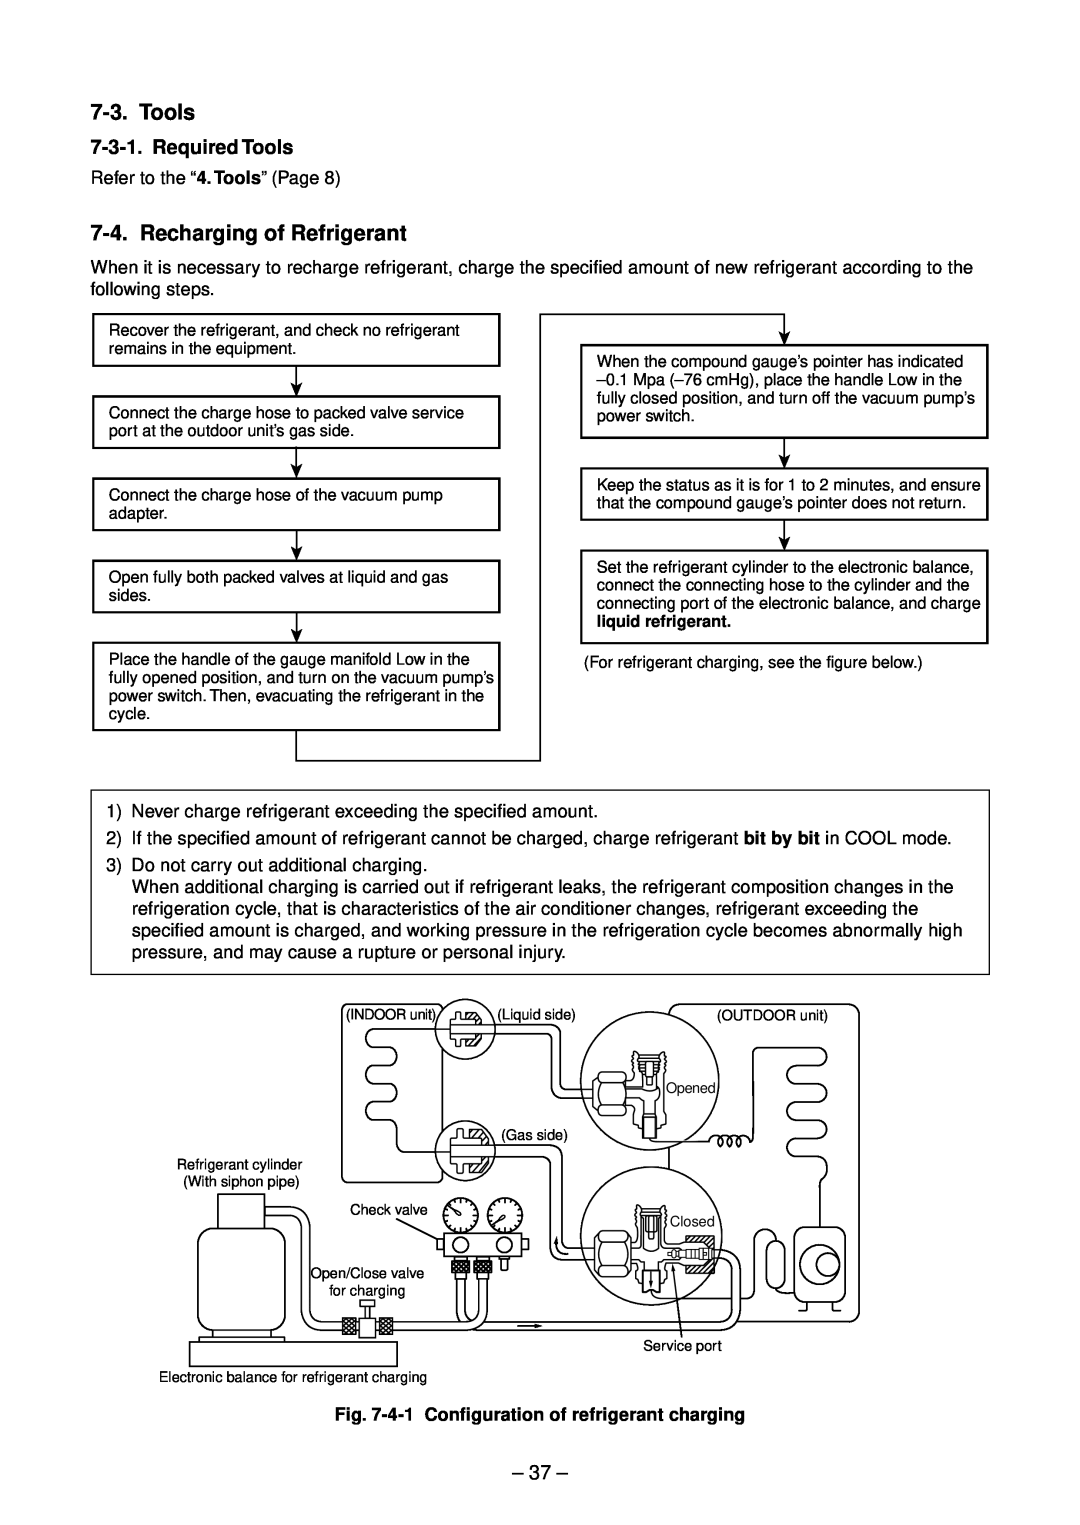 Toshiba RAV-SP404AT-E Recharging of Refrigerant, Required Tools, 4-1 Configuration of refrigerant charging 